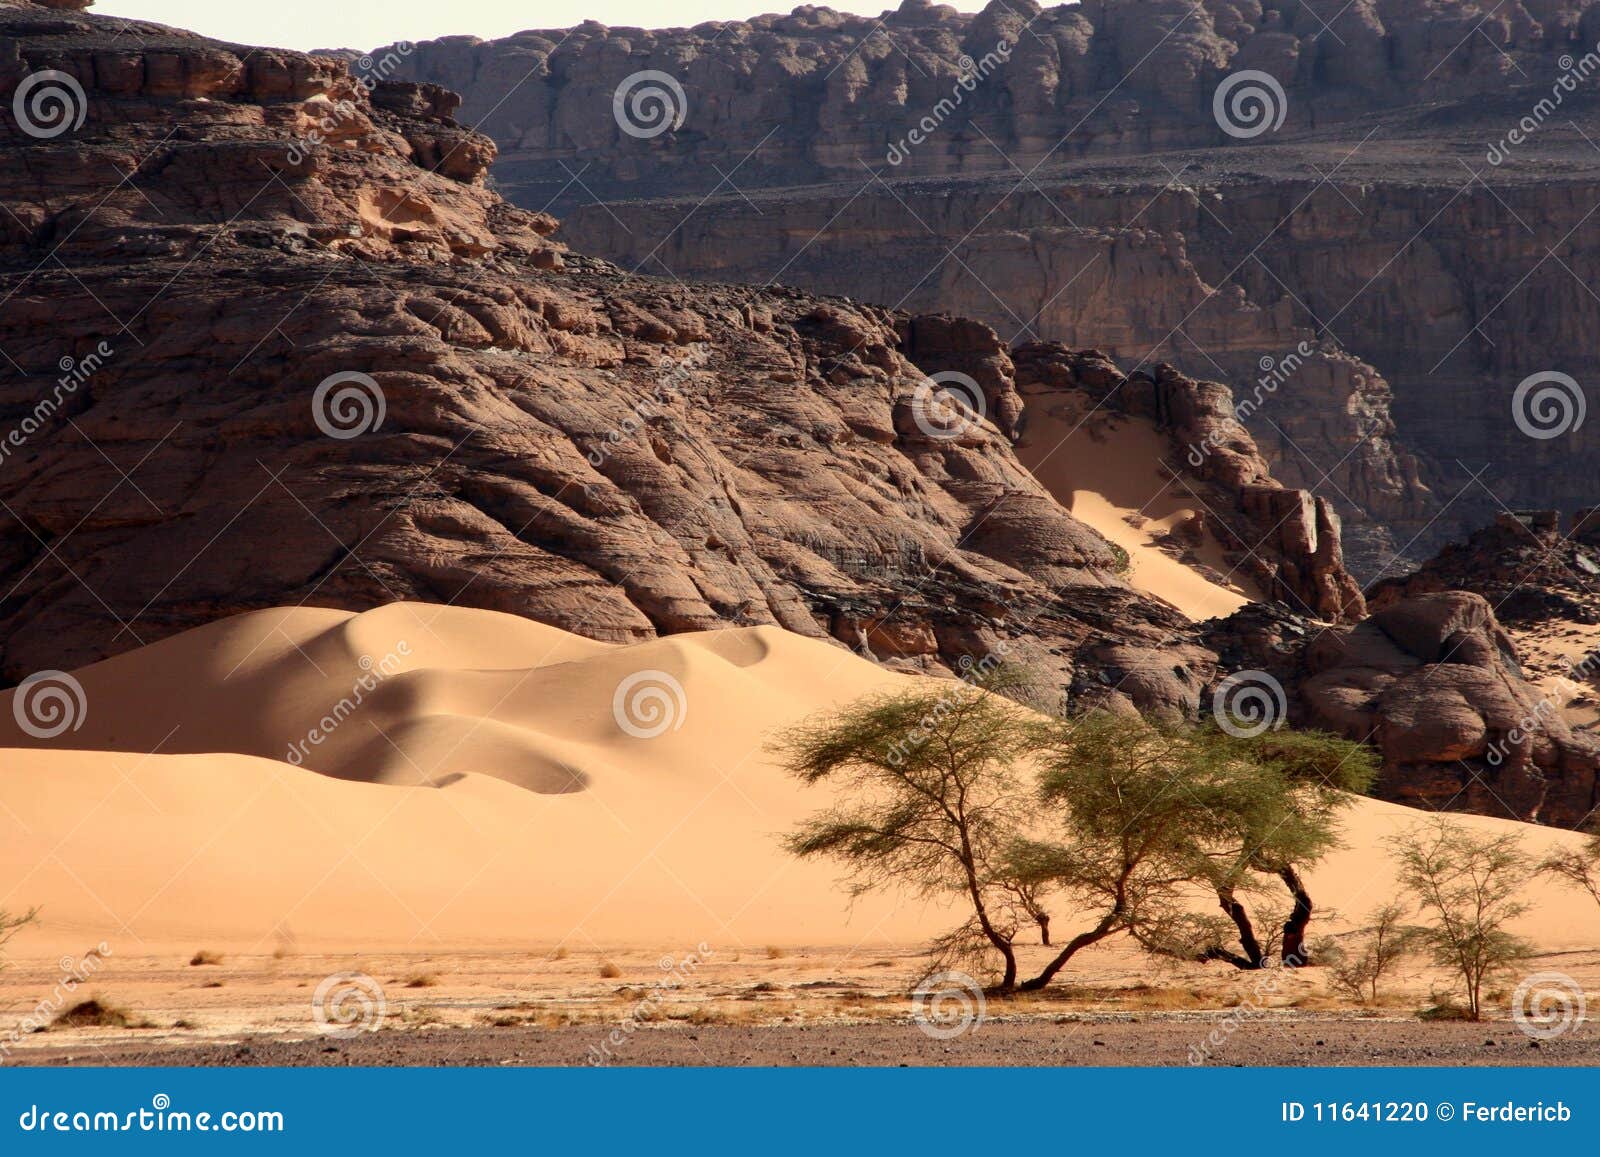 Desert scenes13 stock photo. Image of immense, dunes - 11641220